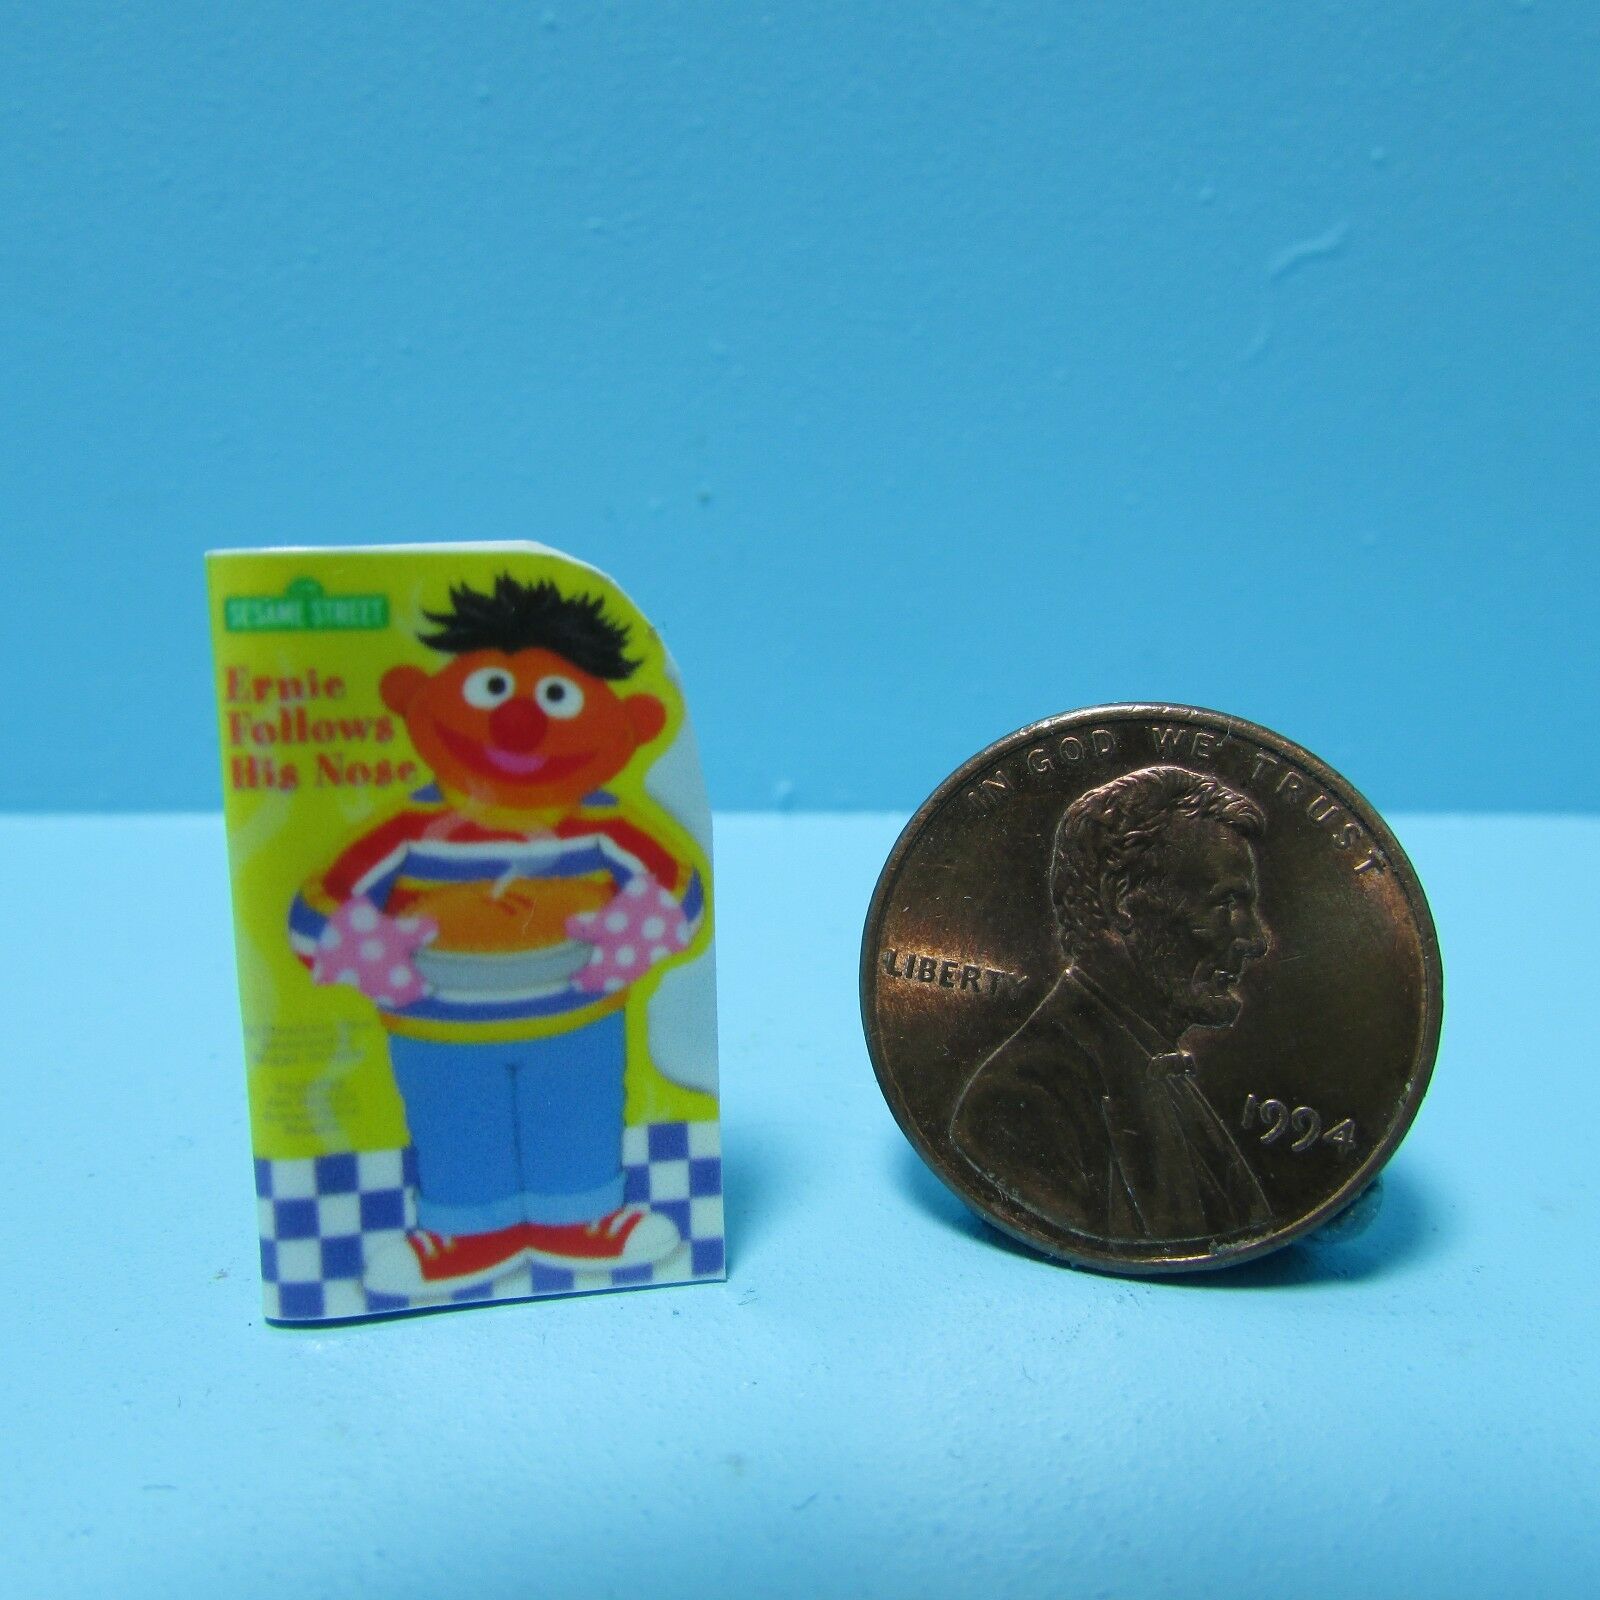 Dollhouse Miniature Replica Of Book Sesame Street Ernie Follows His Nose ~ B070